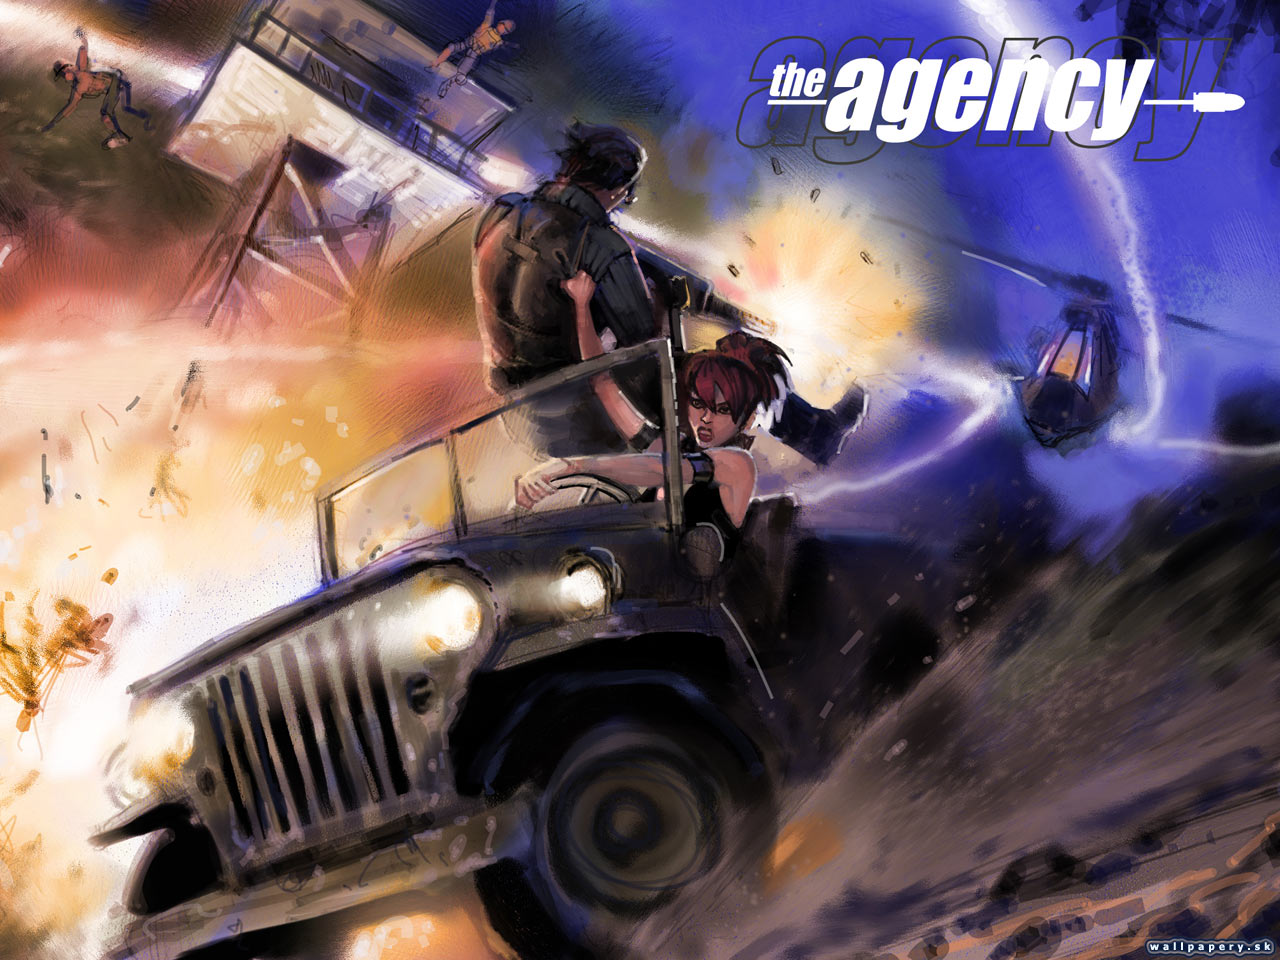 The Agency - wallpaper 7